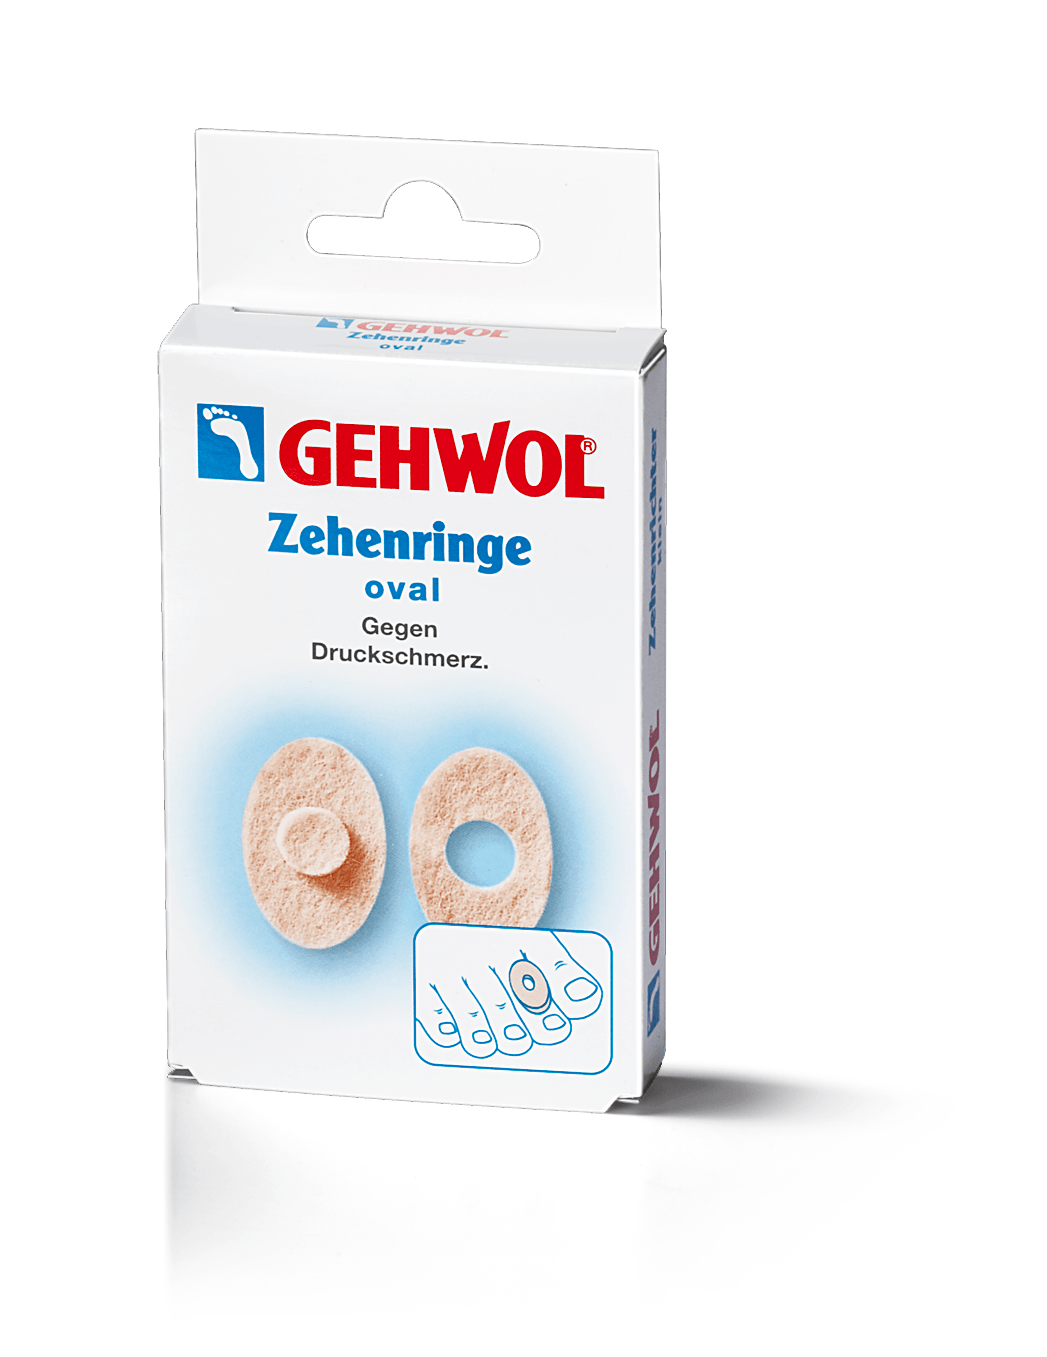 GEHWOL - Zehenringe